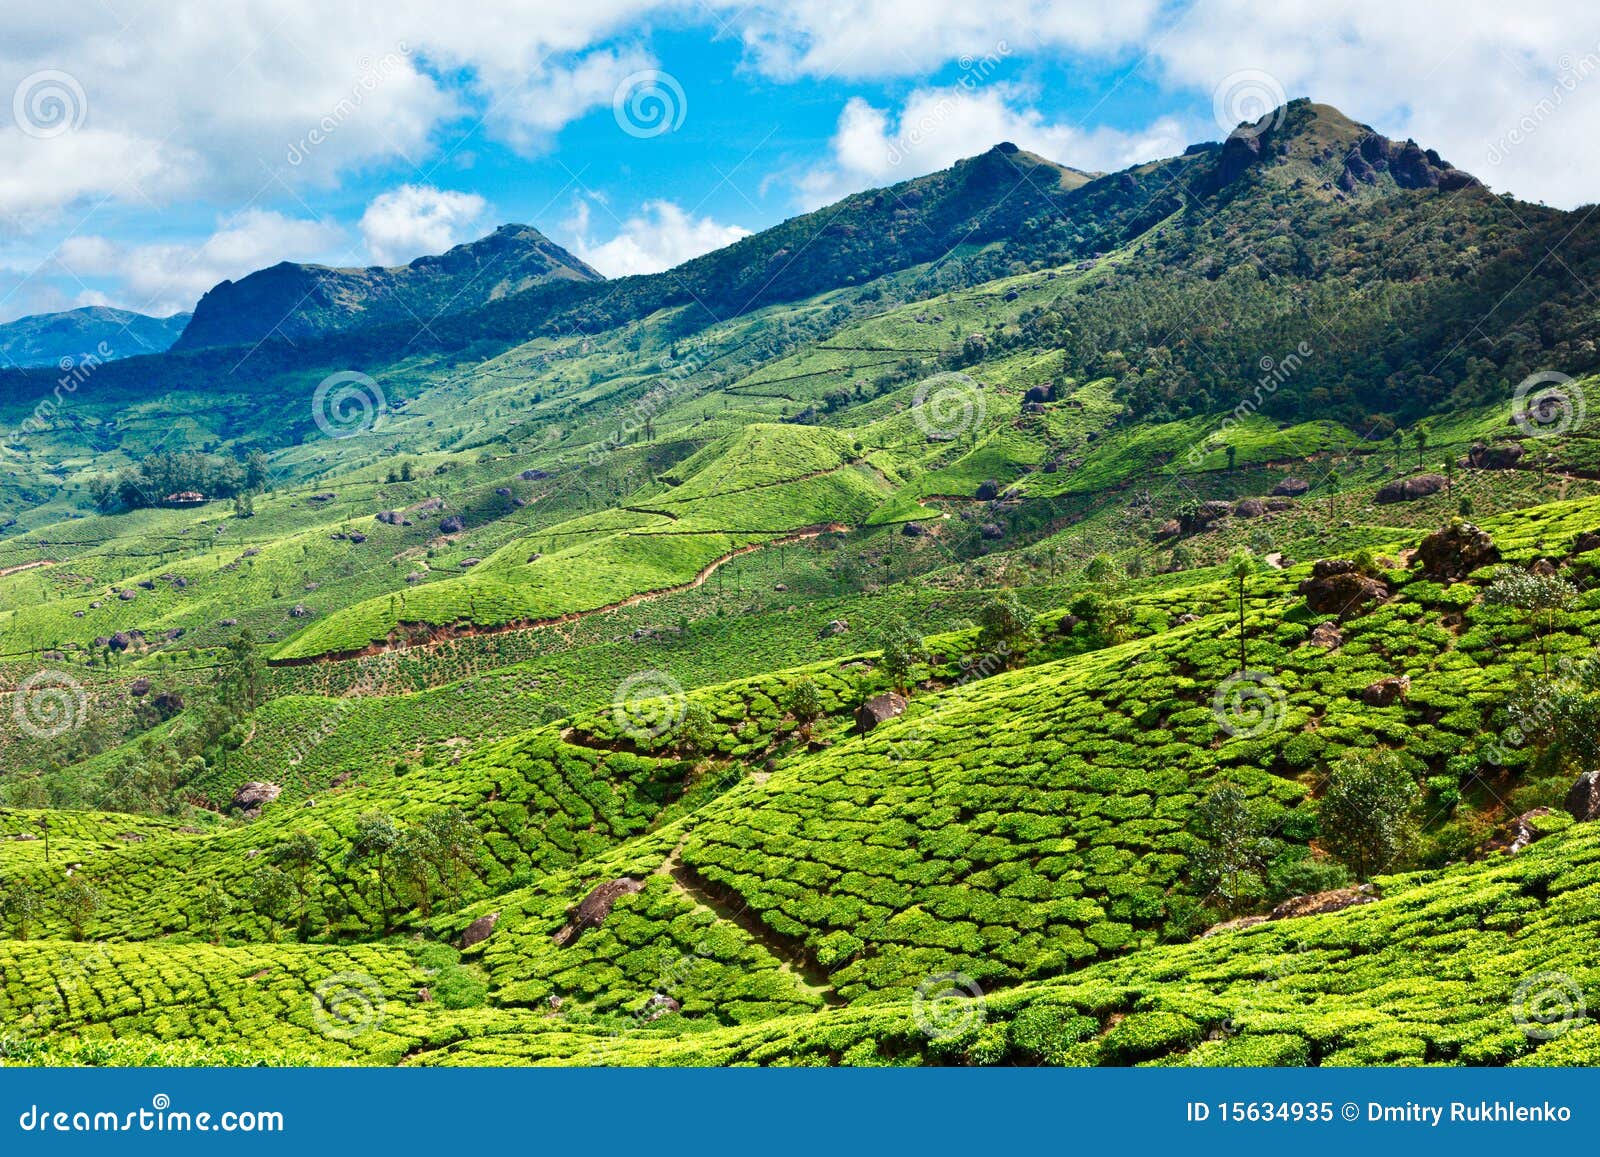 tea plantations in kerala, india